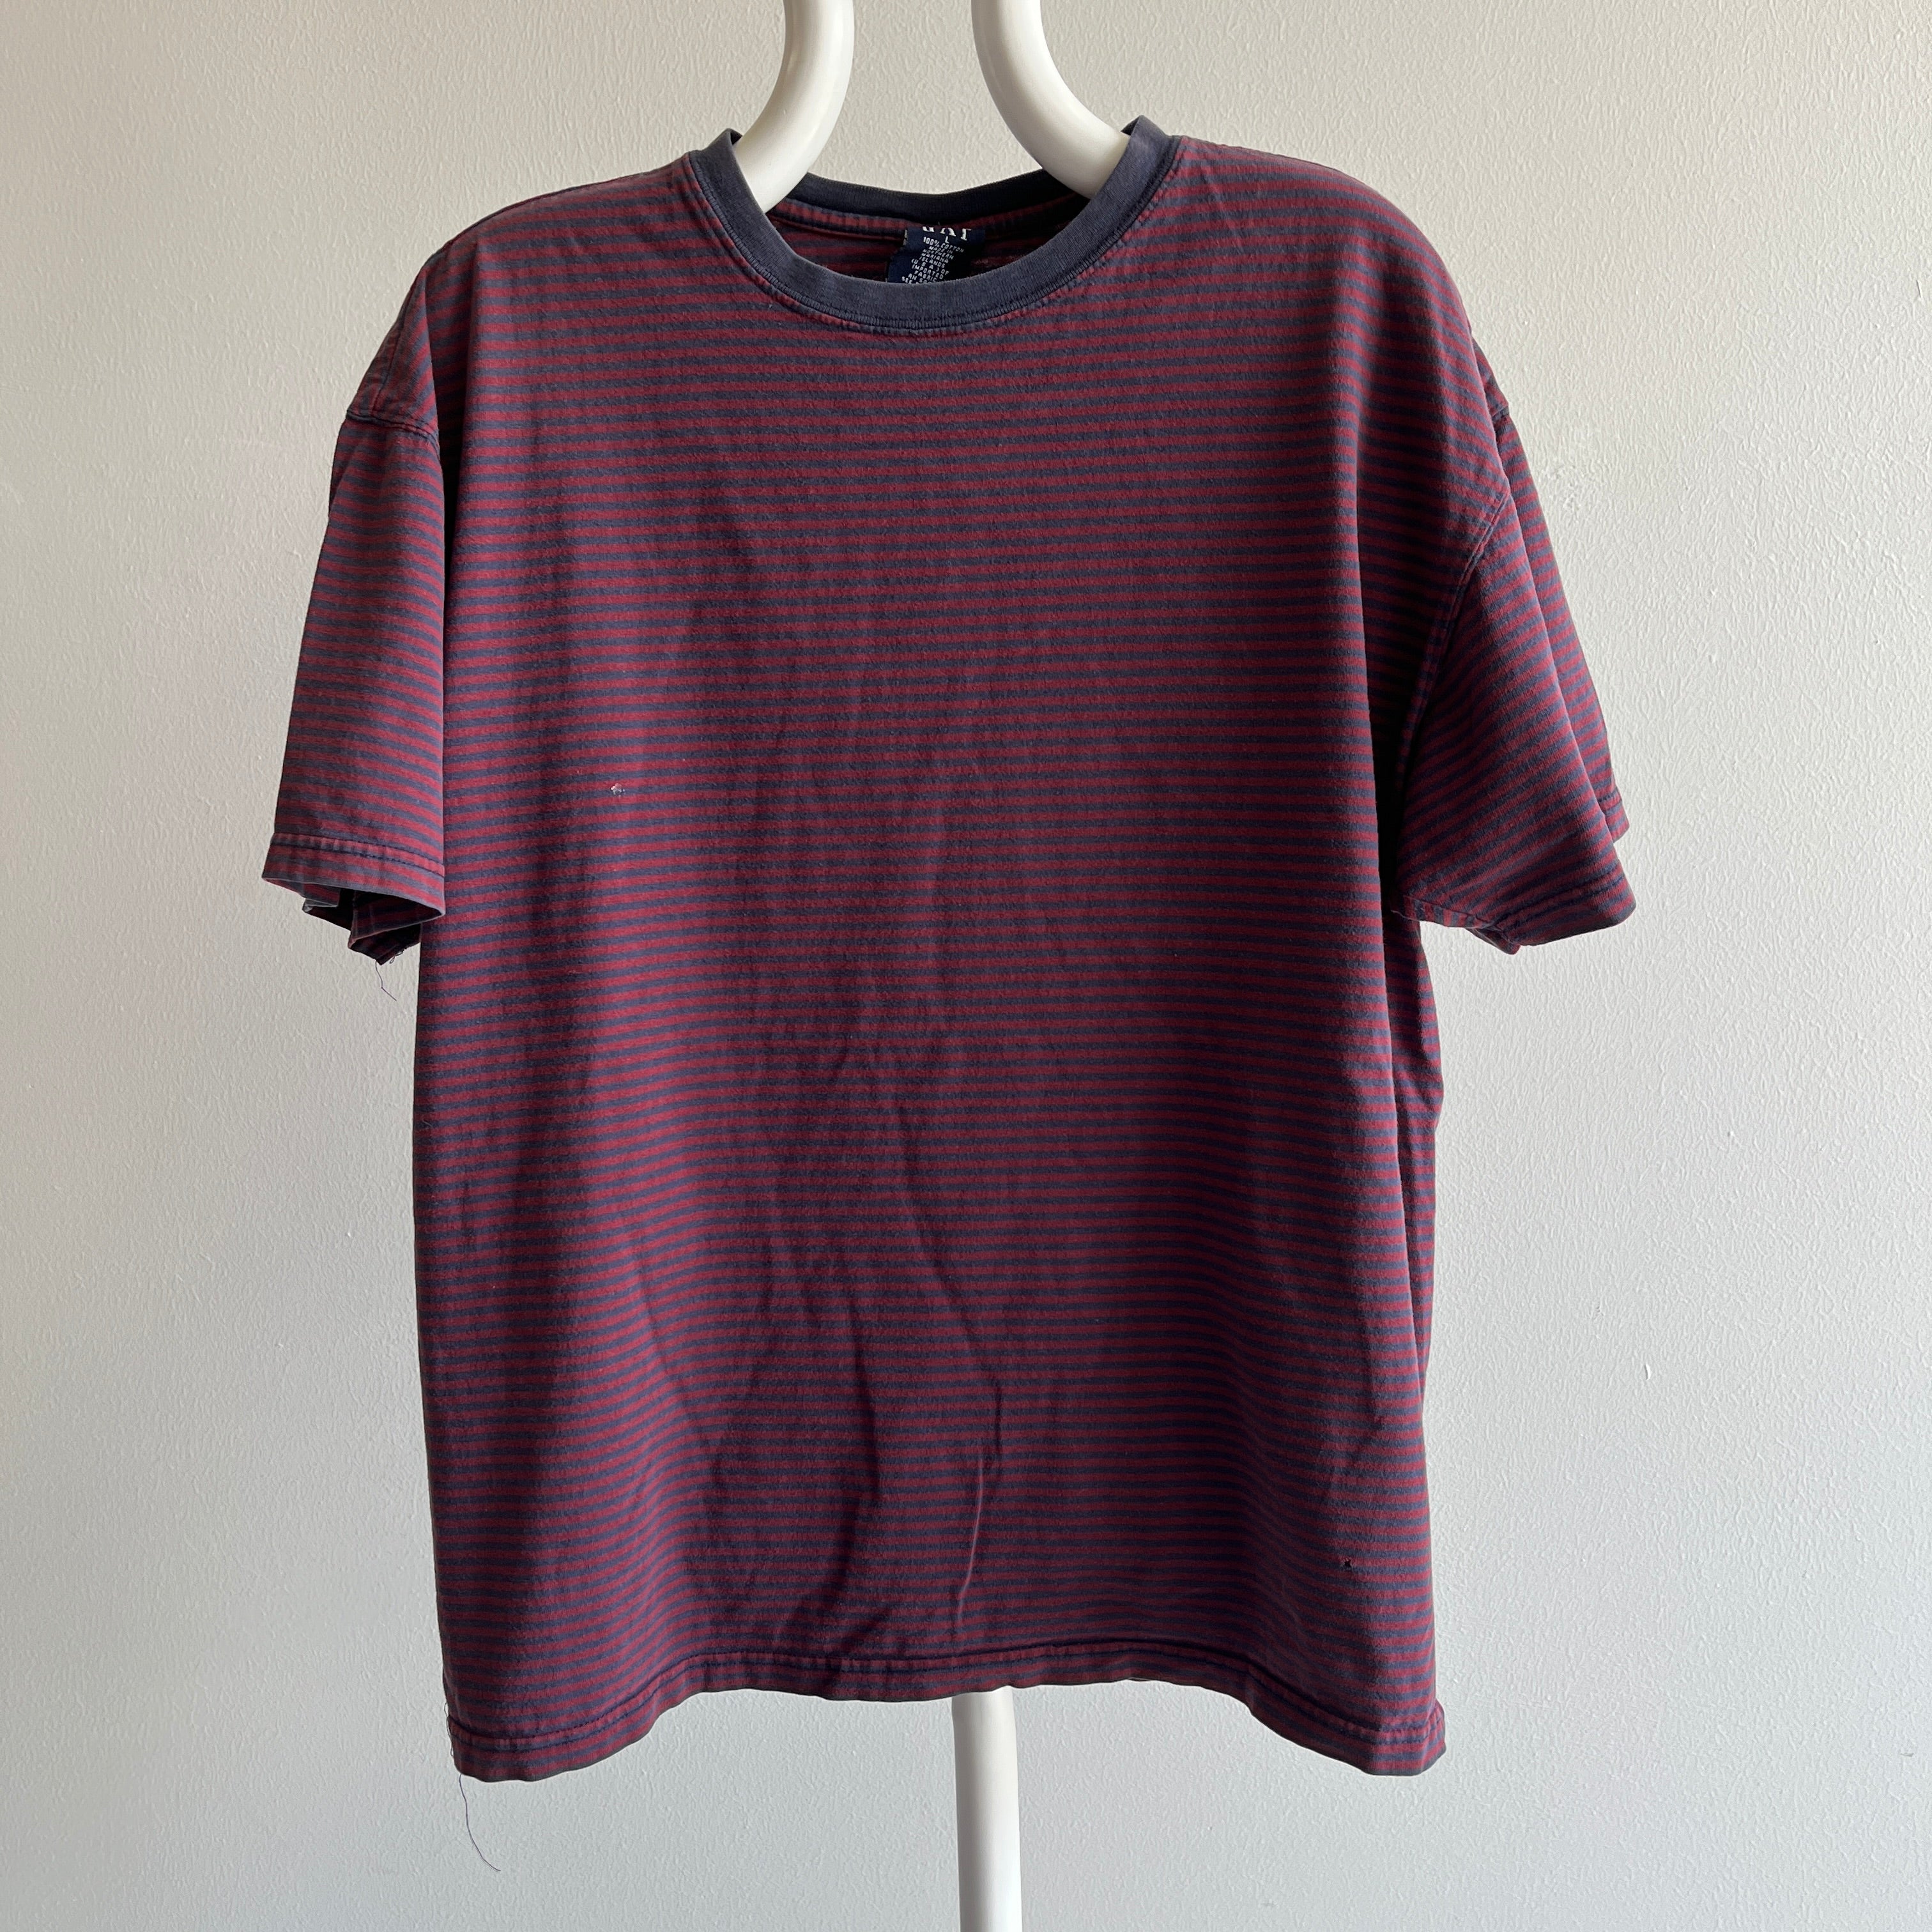 1990s Faded Gap Boxy Striped Cotton T-Shirt